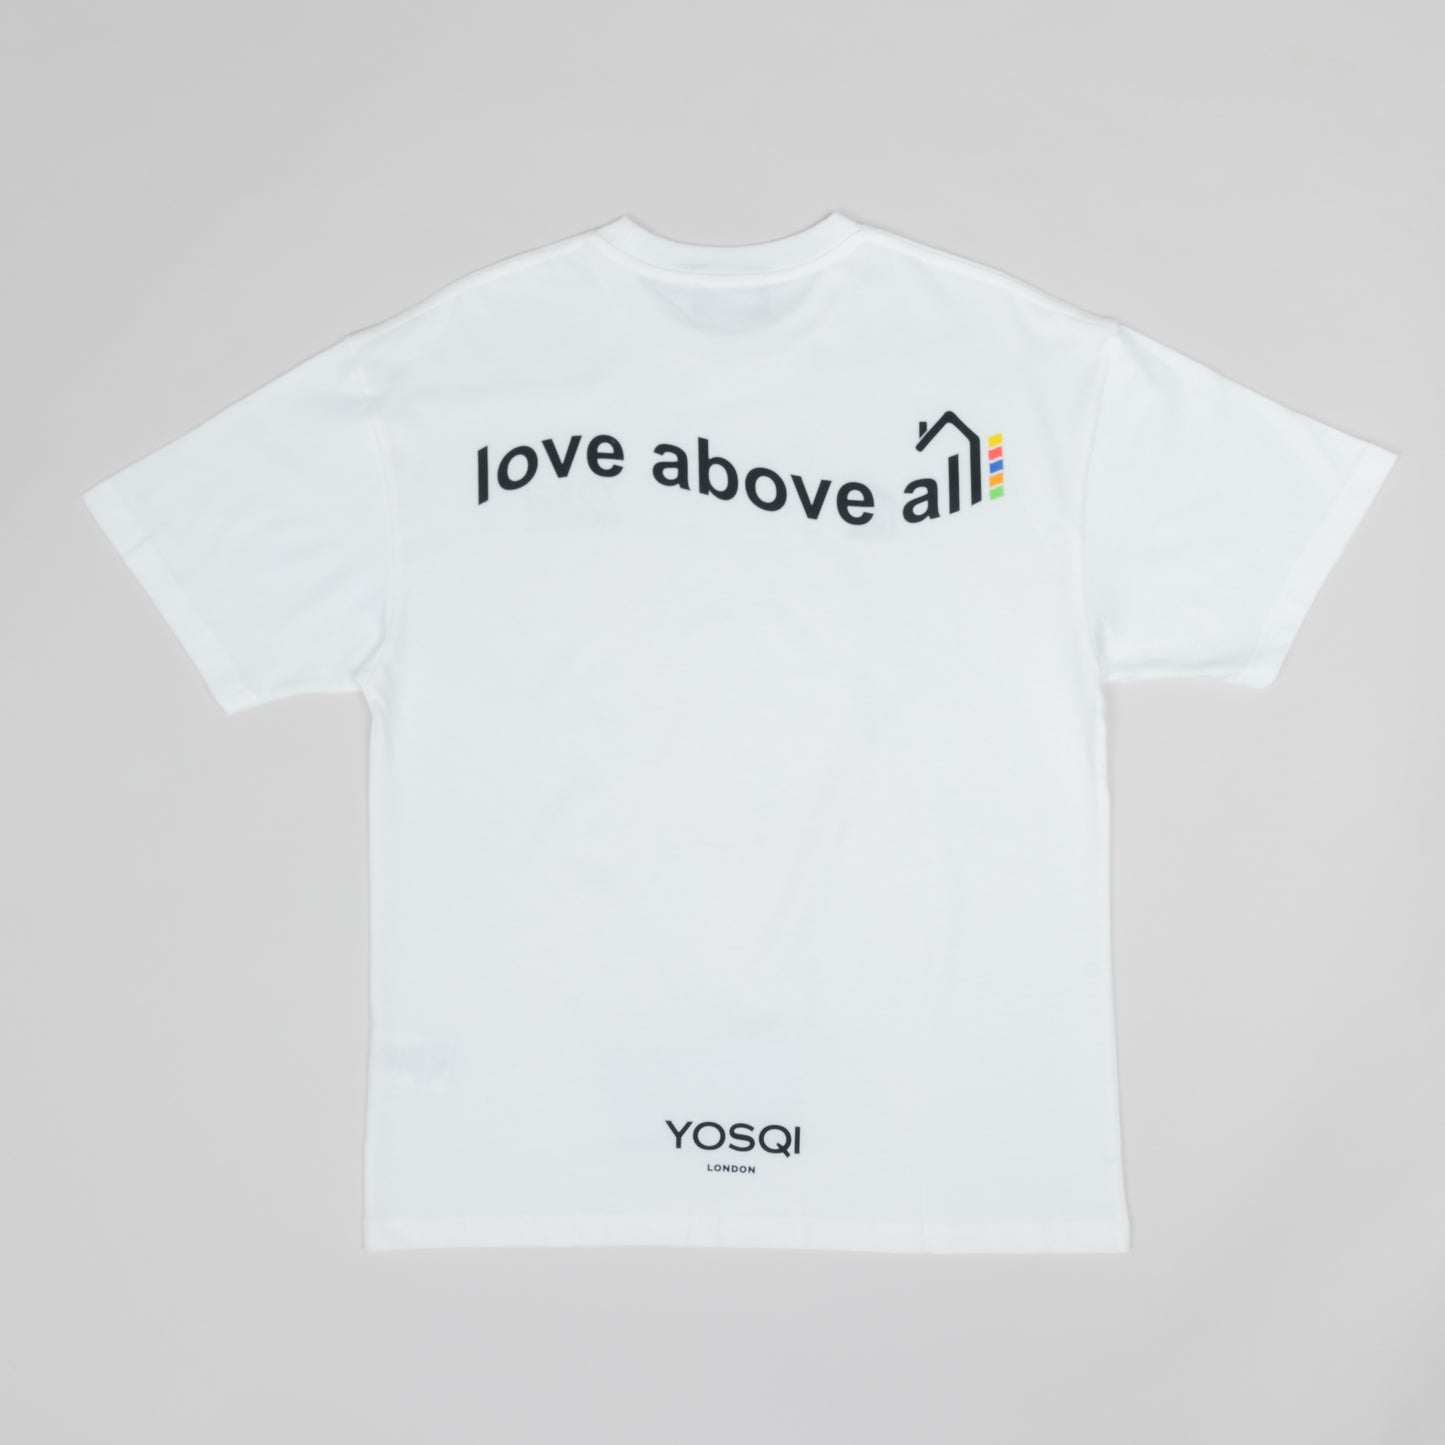 Yosqi 'Love above all' Tee